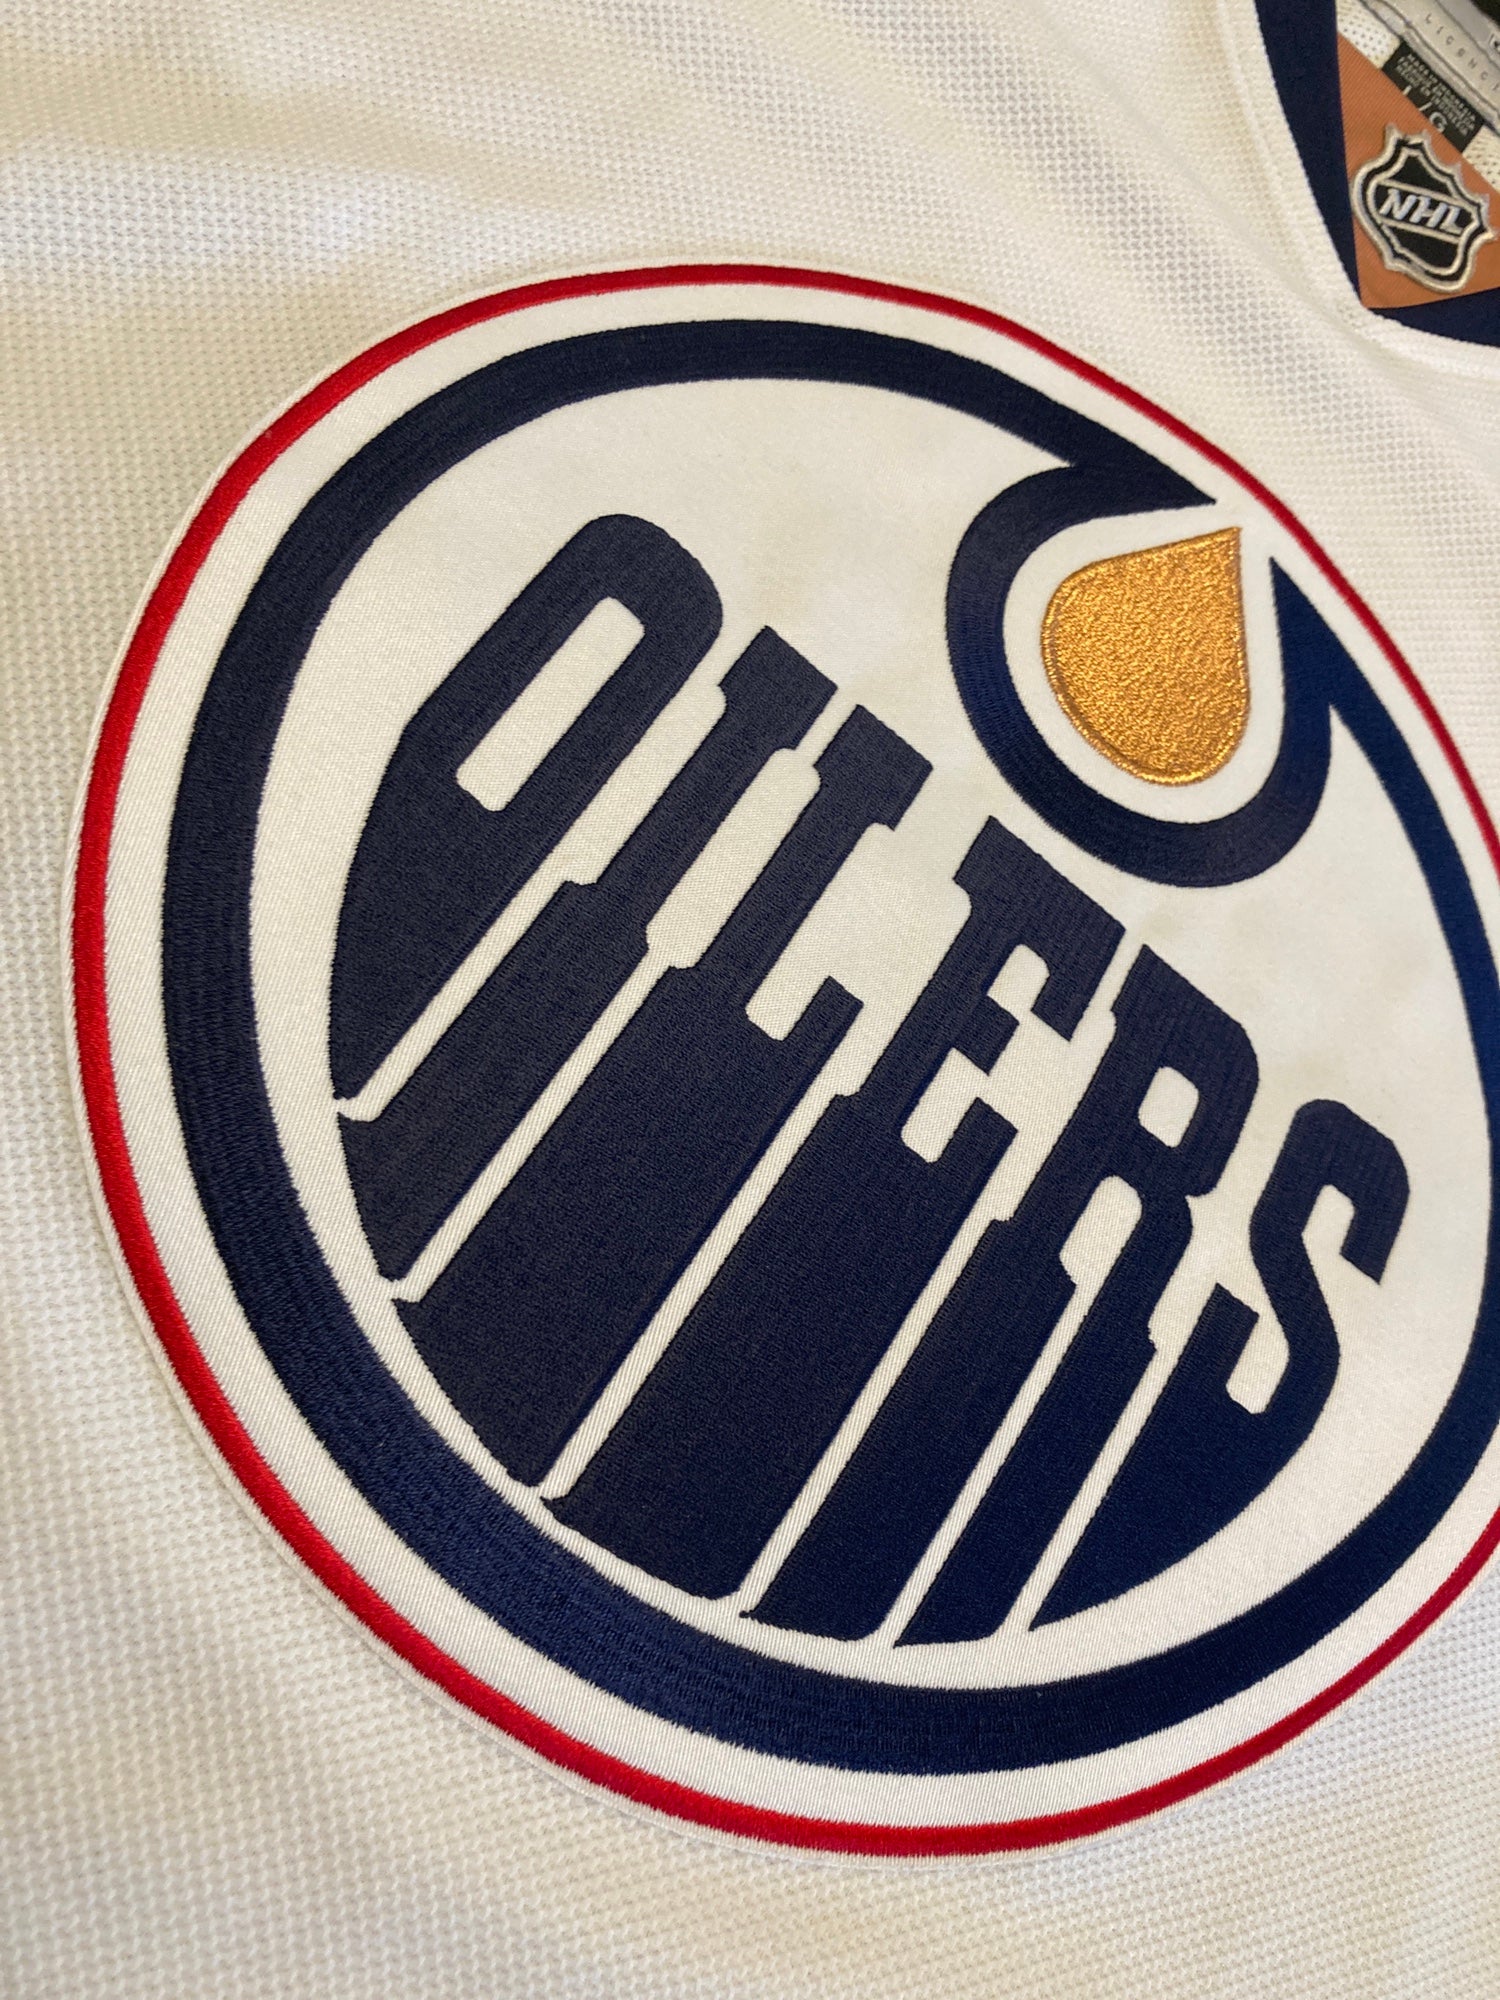 Koho Edmonton Oilers McFarlane Alternate 3rd Airknit NHL Hockey Jersey Sz  Medium ❌❌❌sold❌❌❌ #edmonton #edmontonoilers #oilers #mcfarlane…